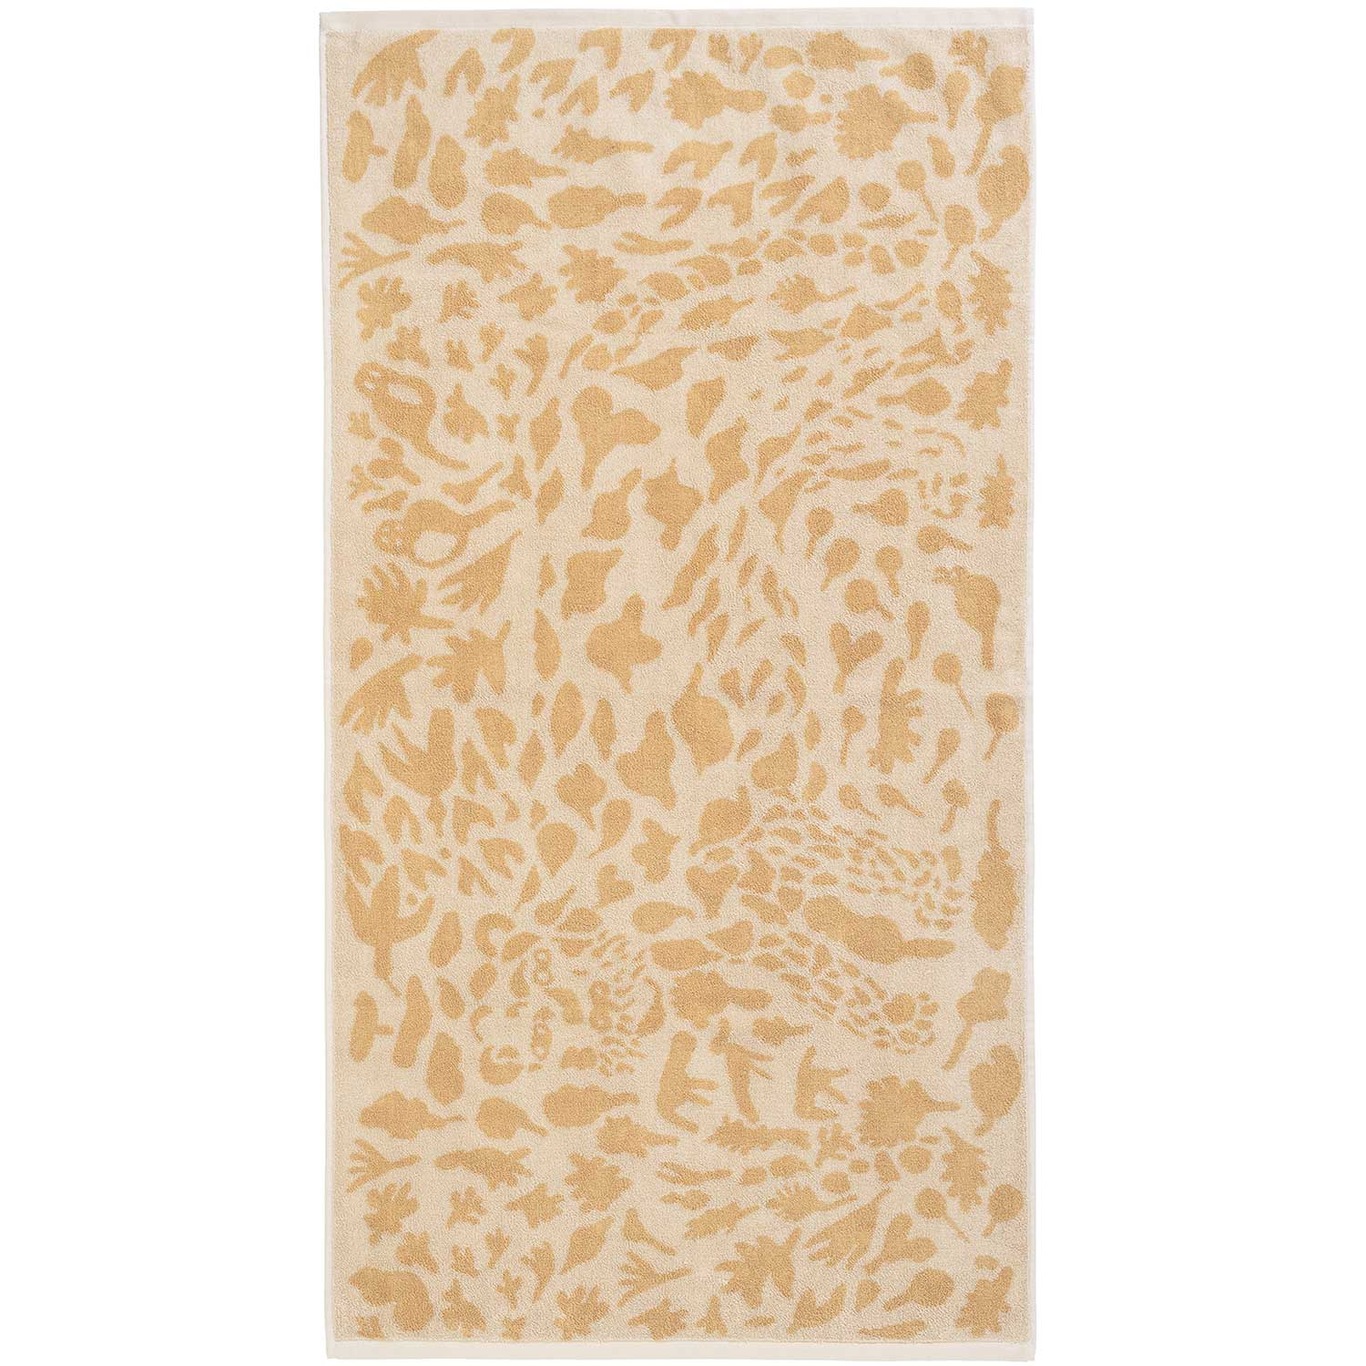 Oiva Toikka Collection Handduk, 70x140 cm, Cheetah Brown